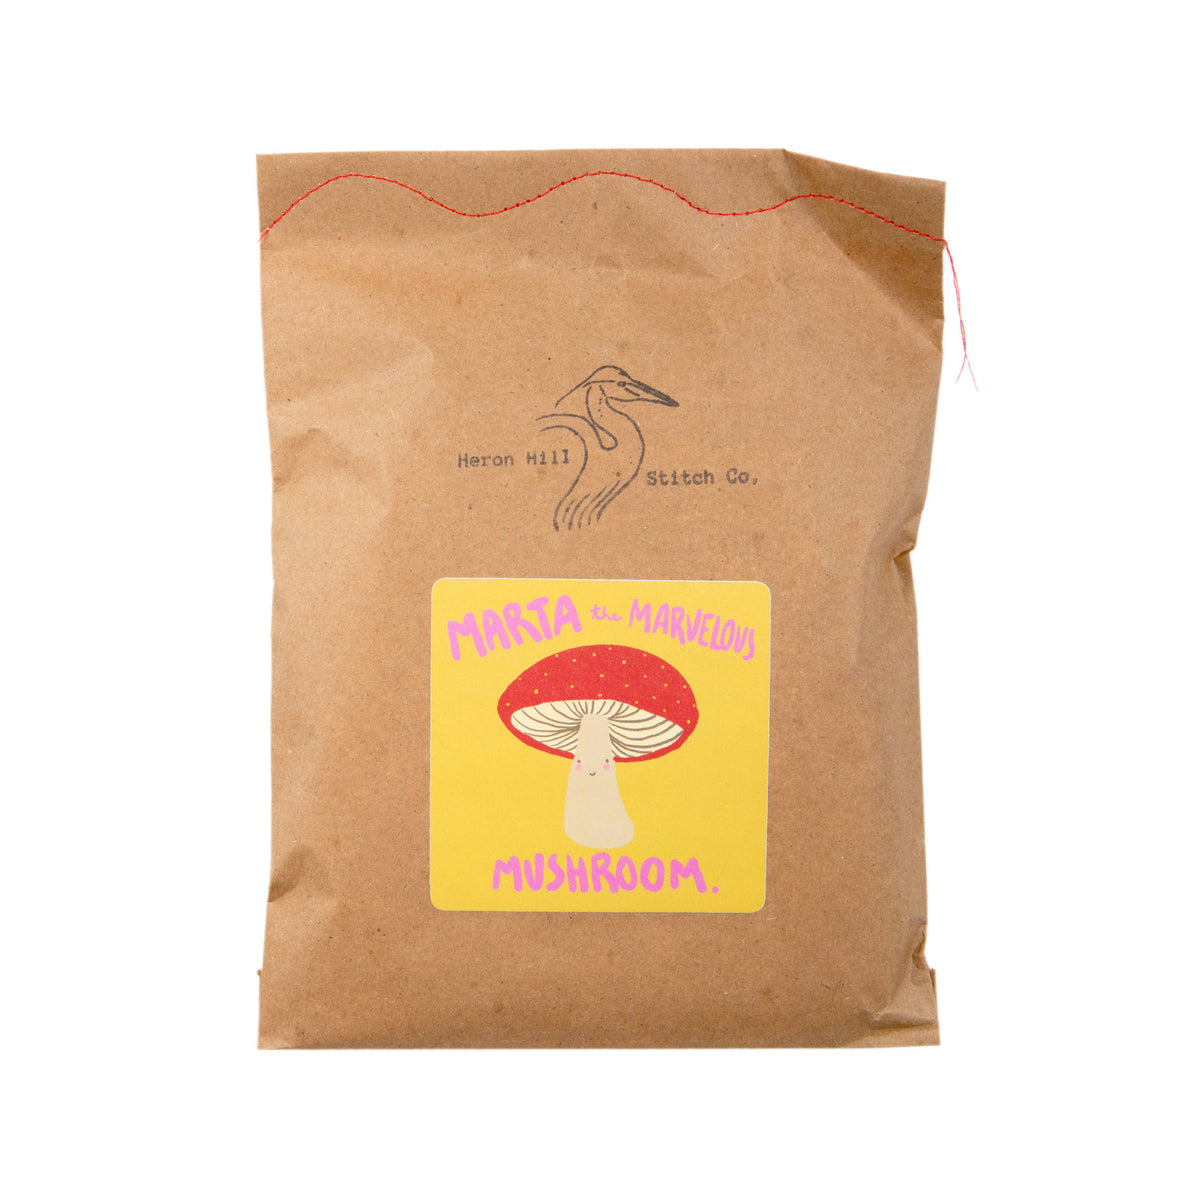 Marta the Marvelous Mushroom Kit | Heron Hill Stitch Co.